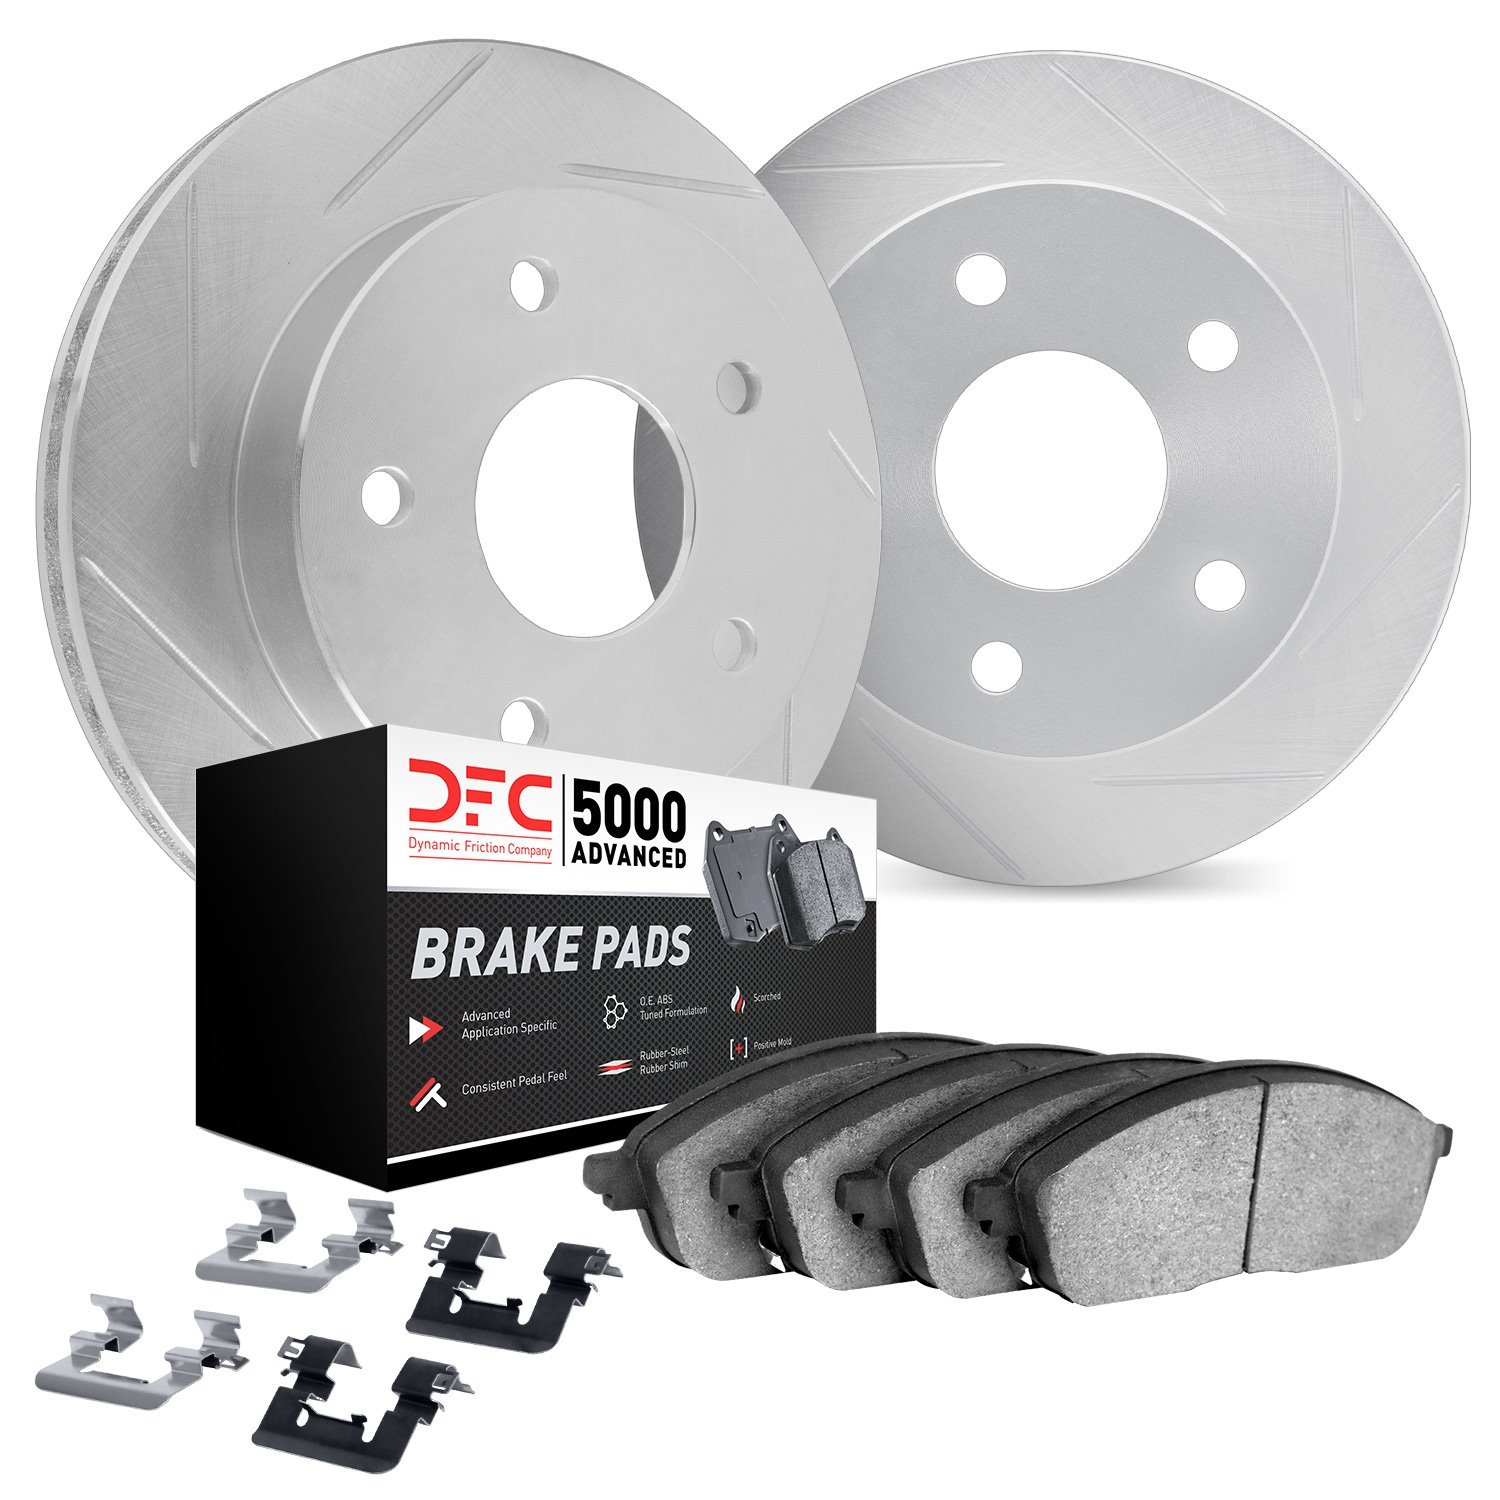 5512-54233 Slotted Brake Rotors w/5000 Advanced Brake Pads Kit & Hardware [Silver], 2015-2020 Ford/Lincoln/Mercury/Mazda, Positi